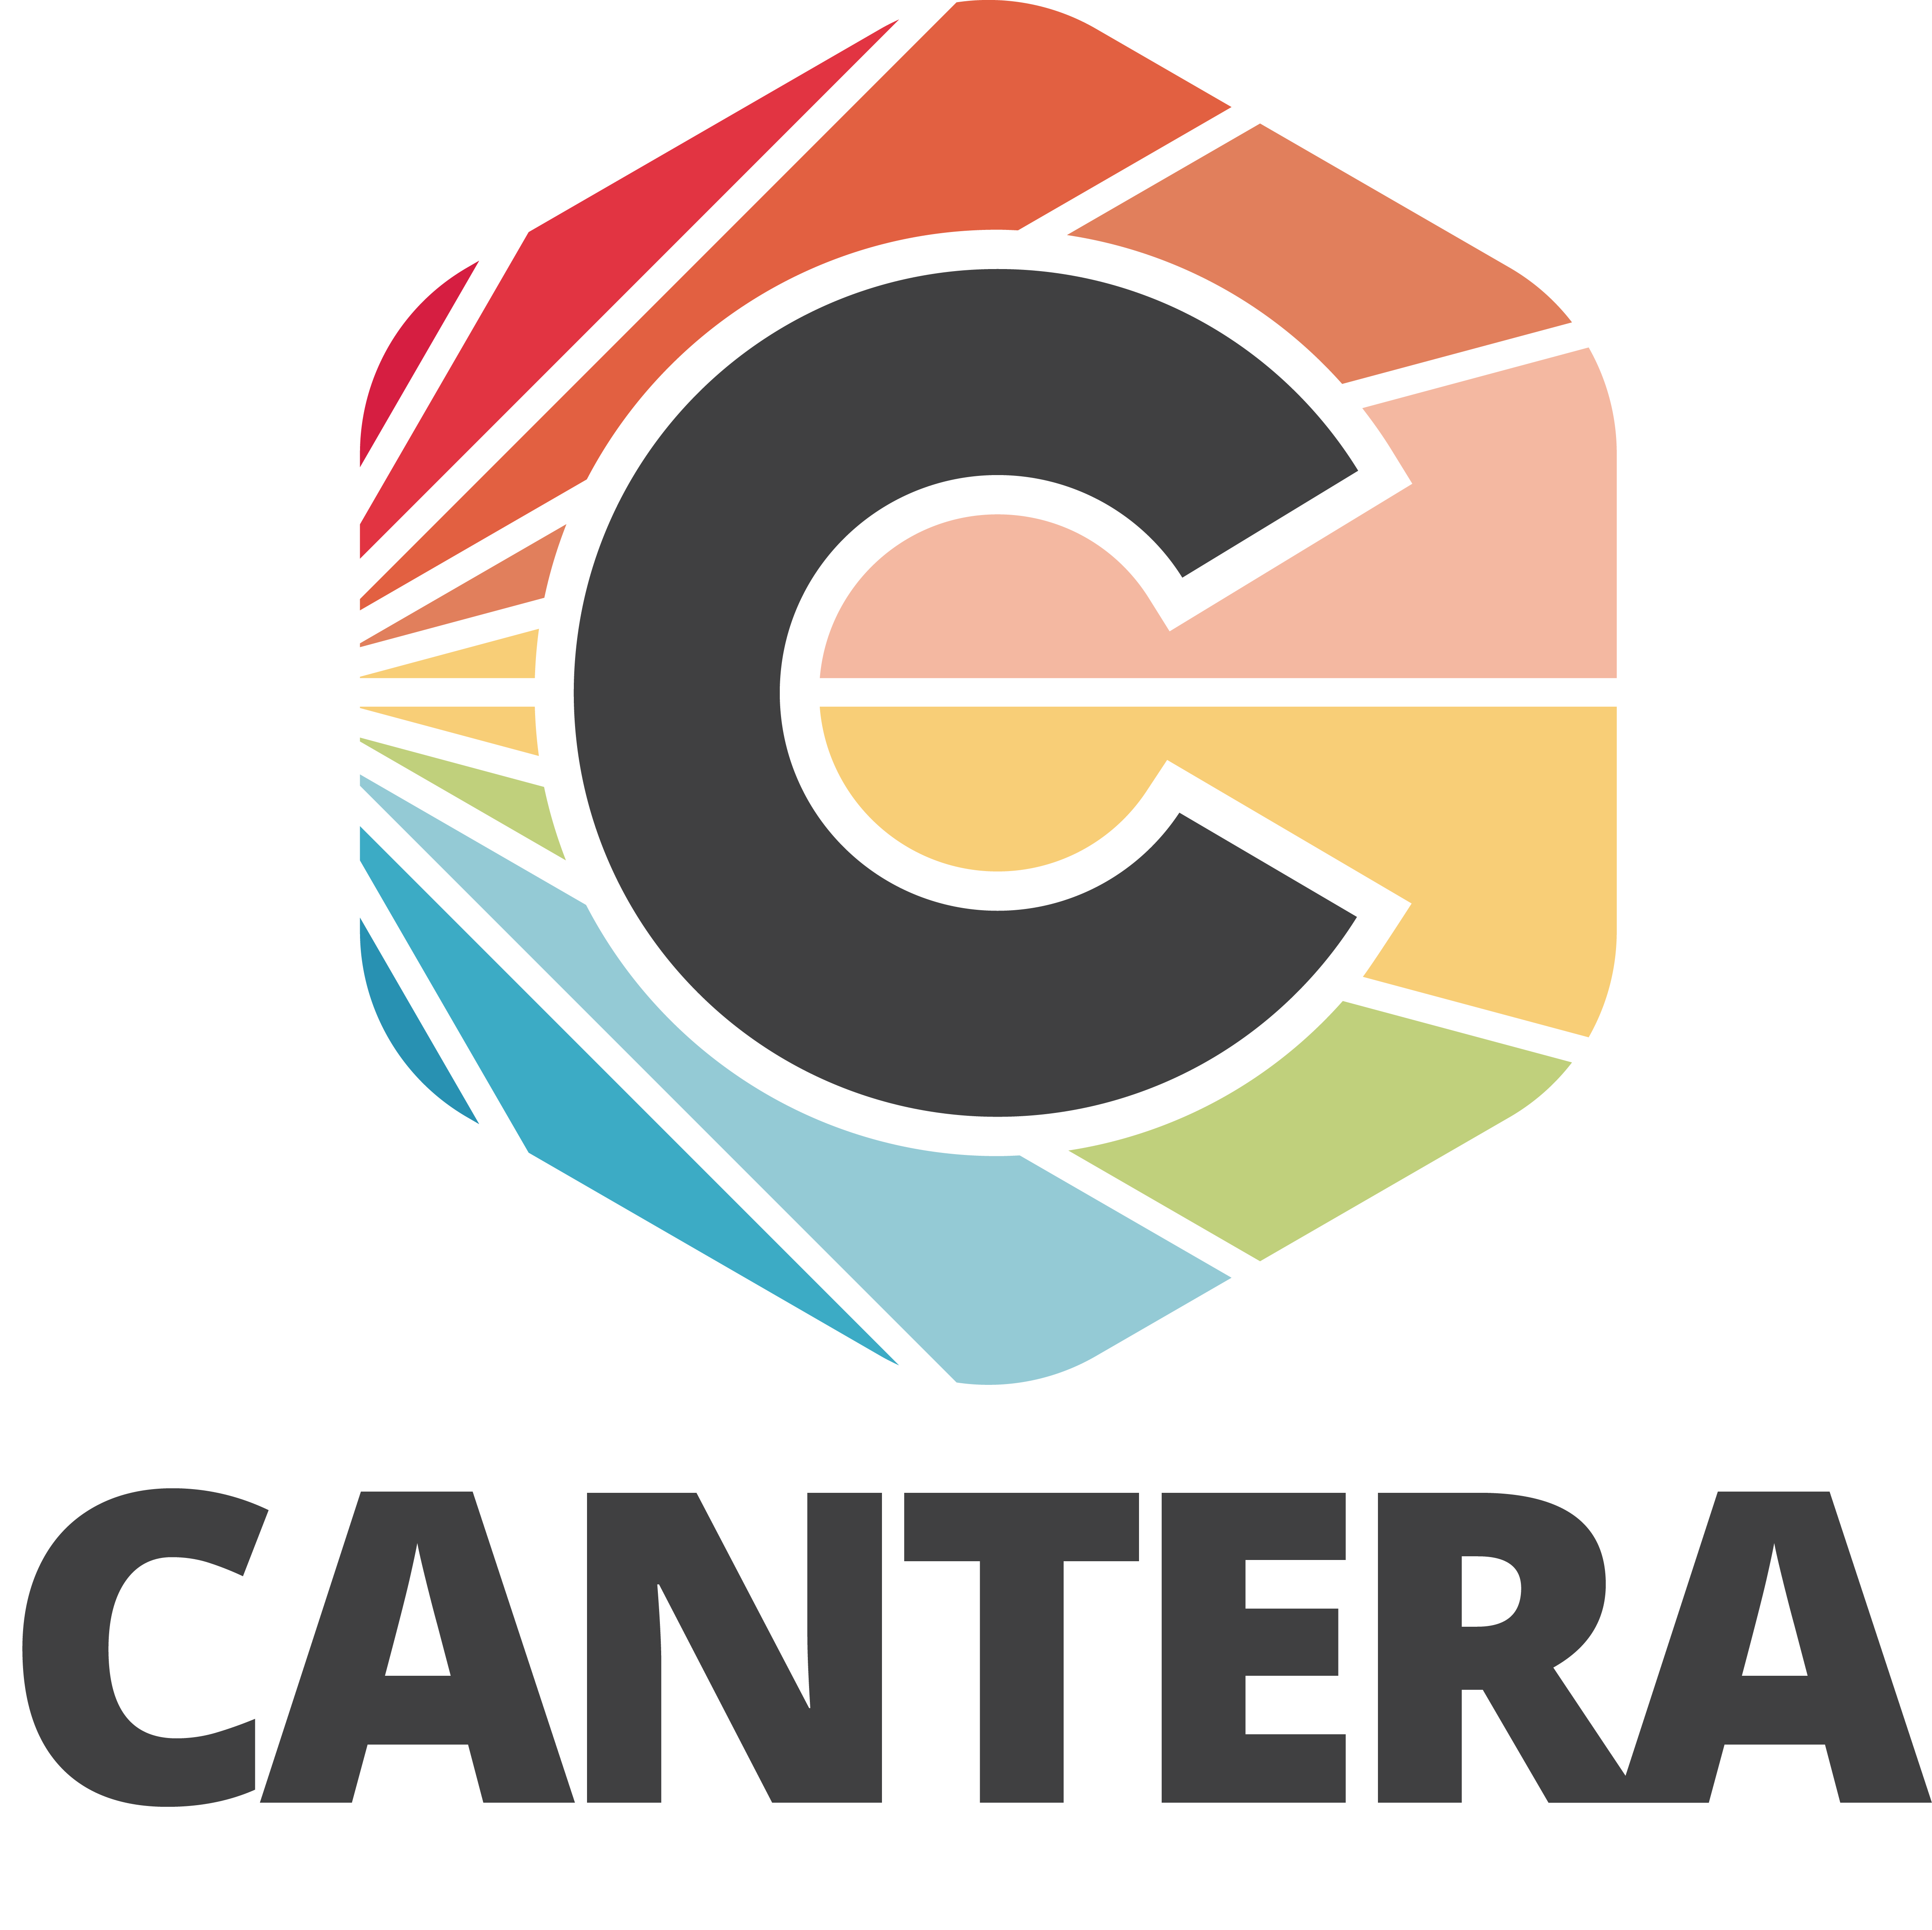 Cantera - Formerly JuanEB